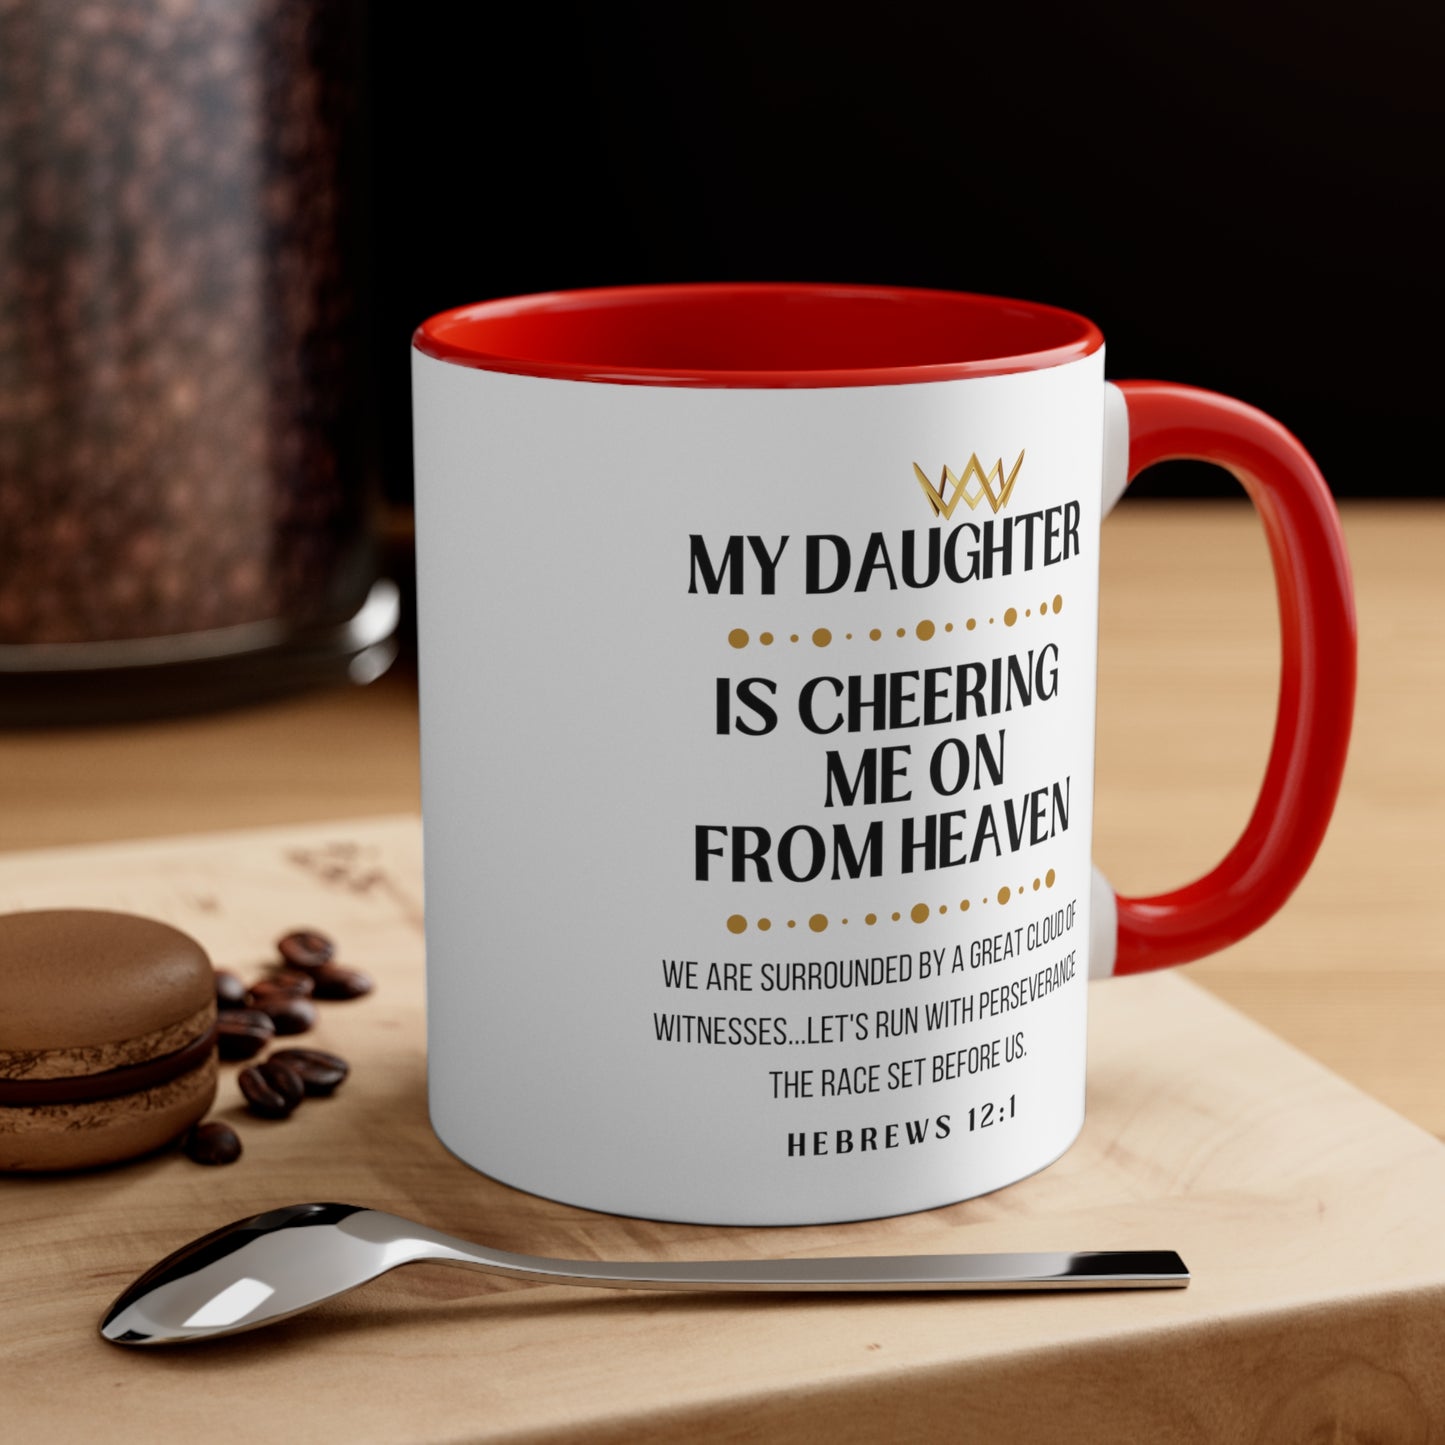 Daughter Memorial Gift Mug, Cheering Me on from Heaven